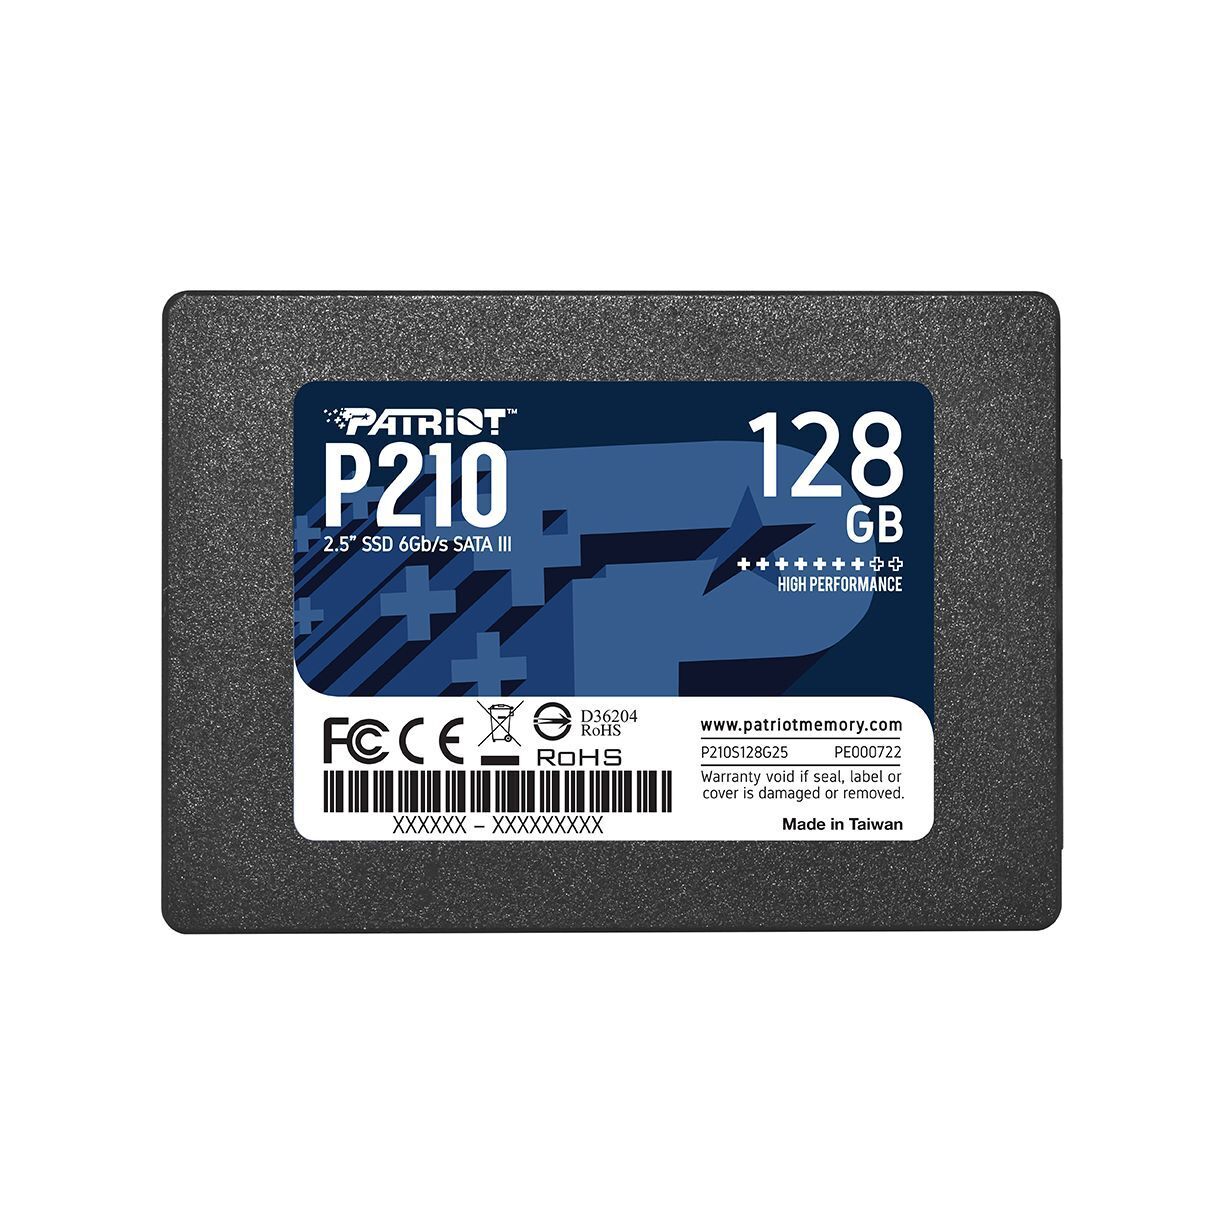 Patriot P210 128GB SSD 2.5